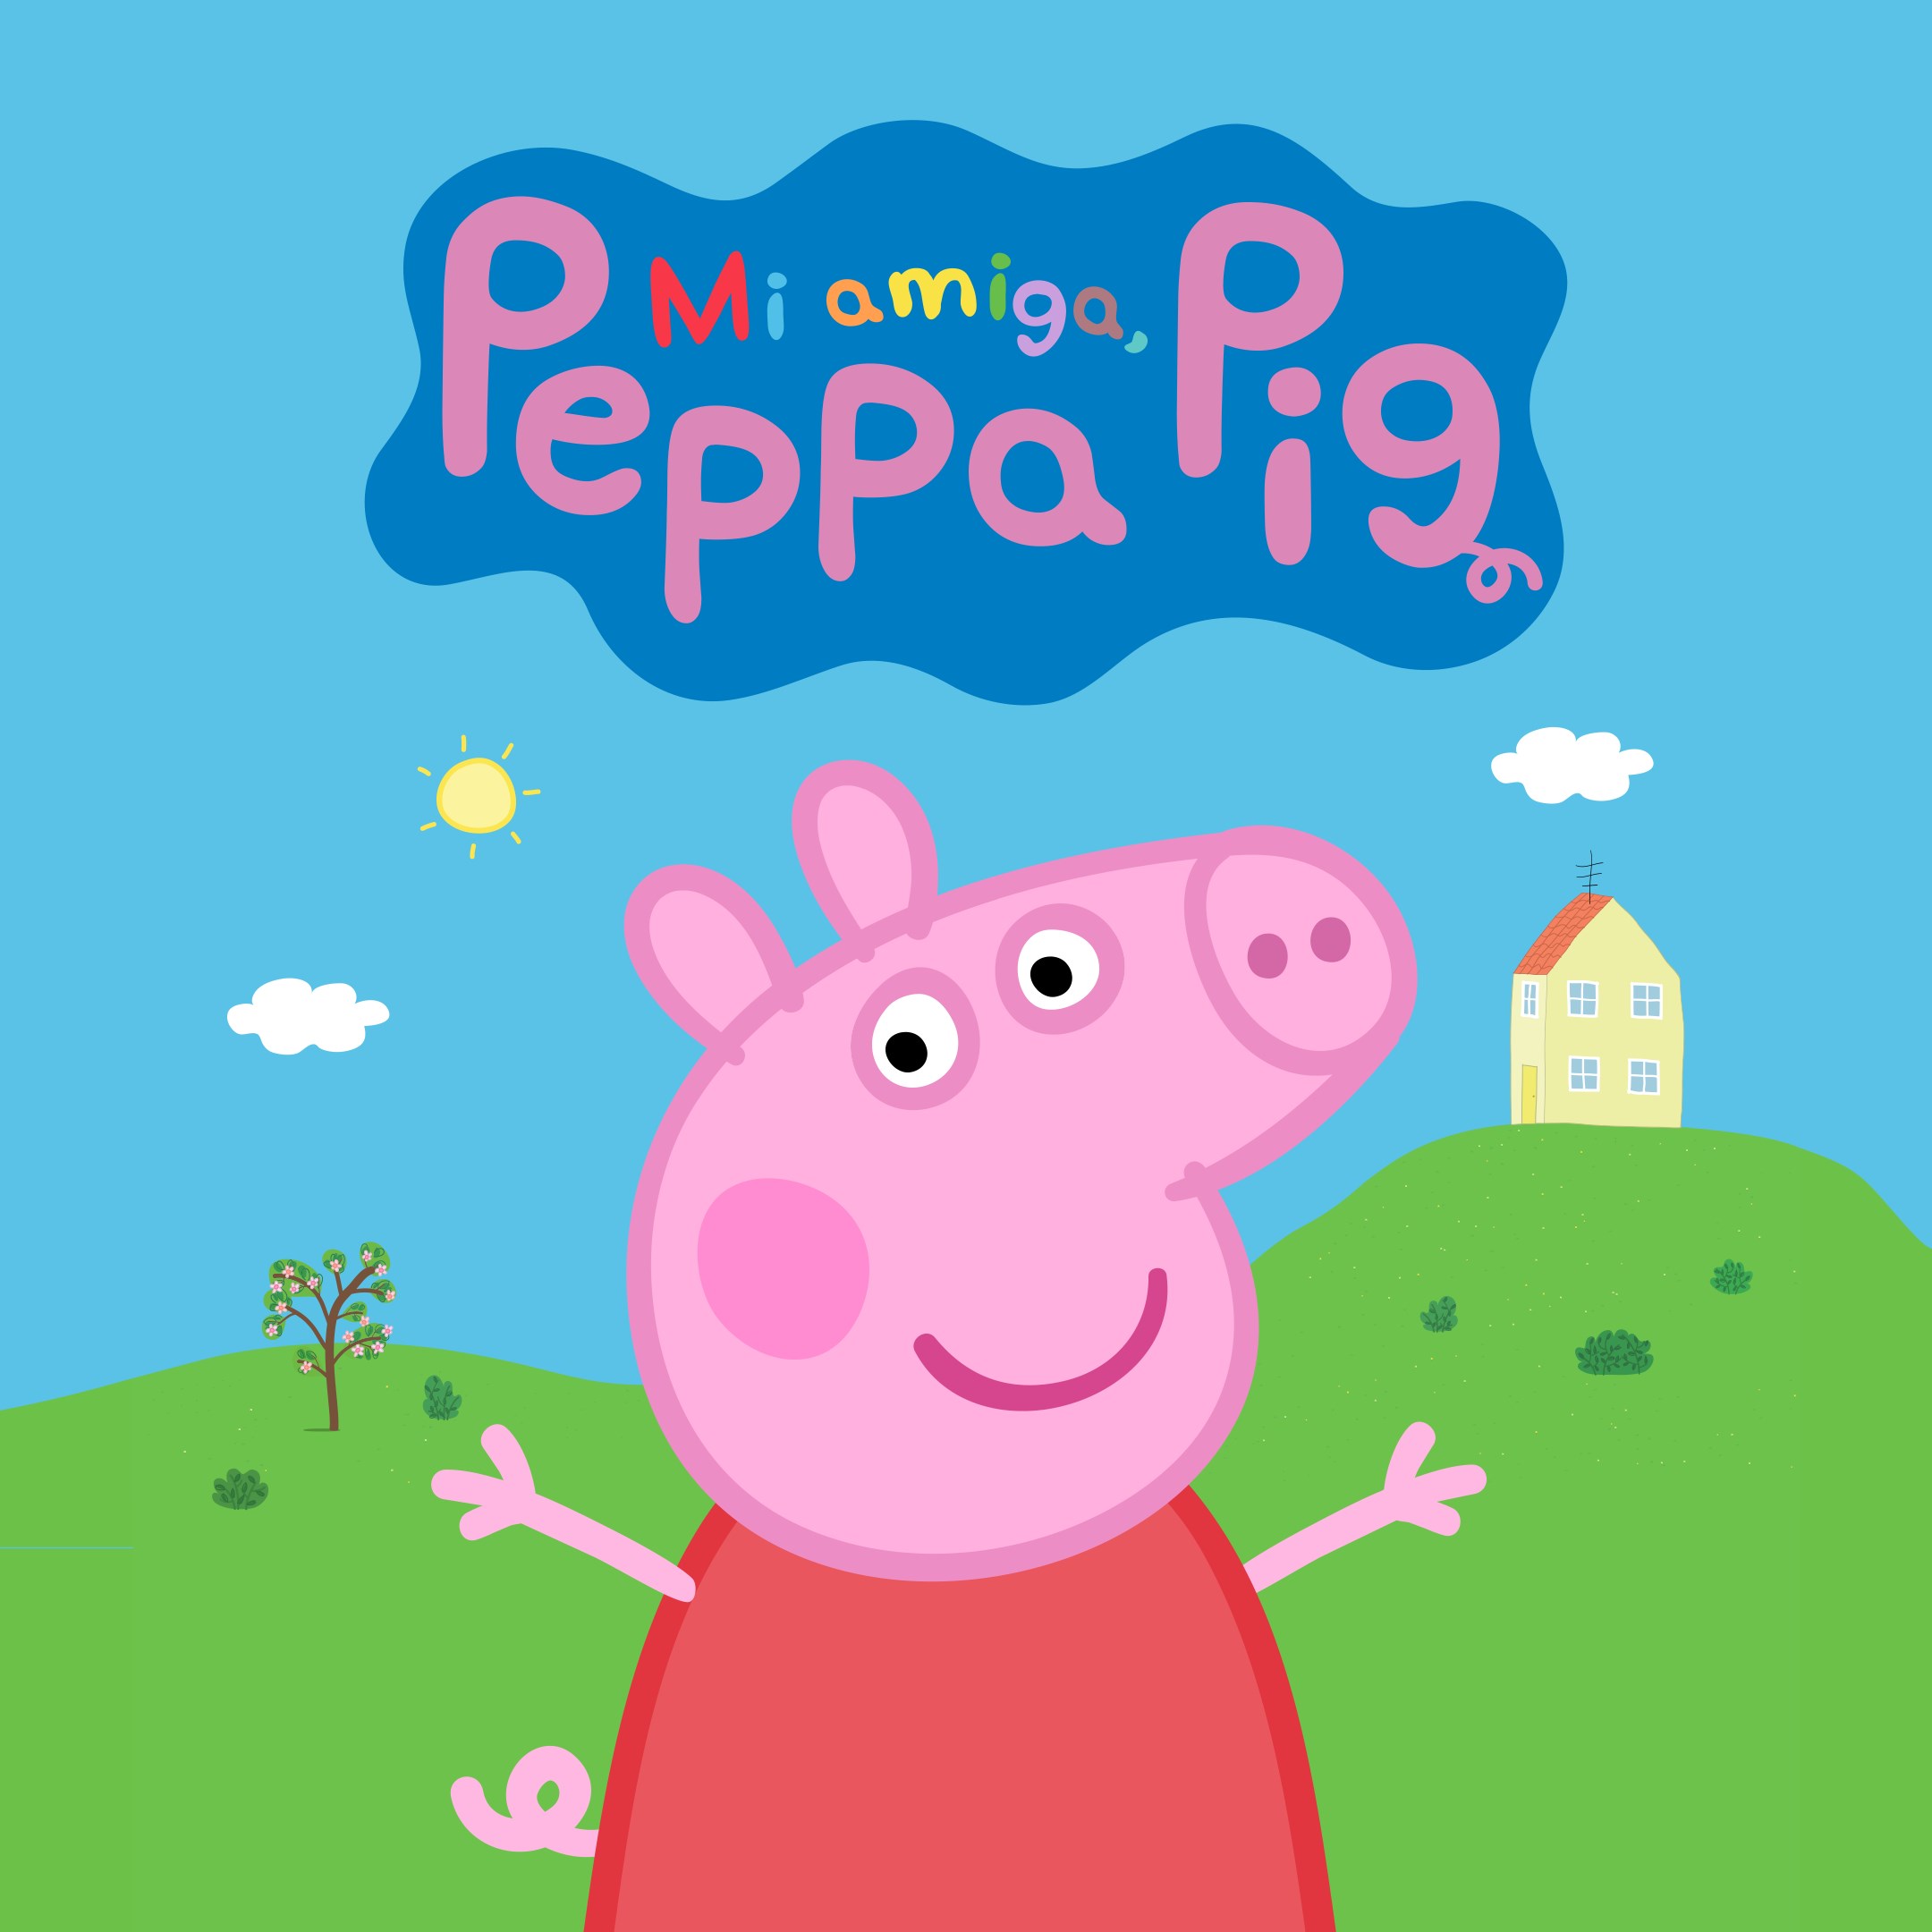 My friend, Peppa Pig